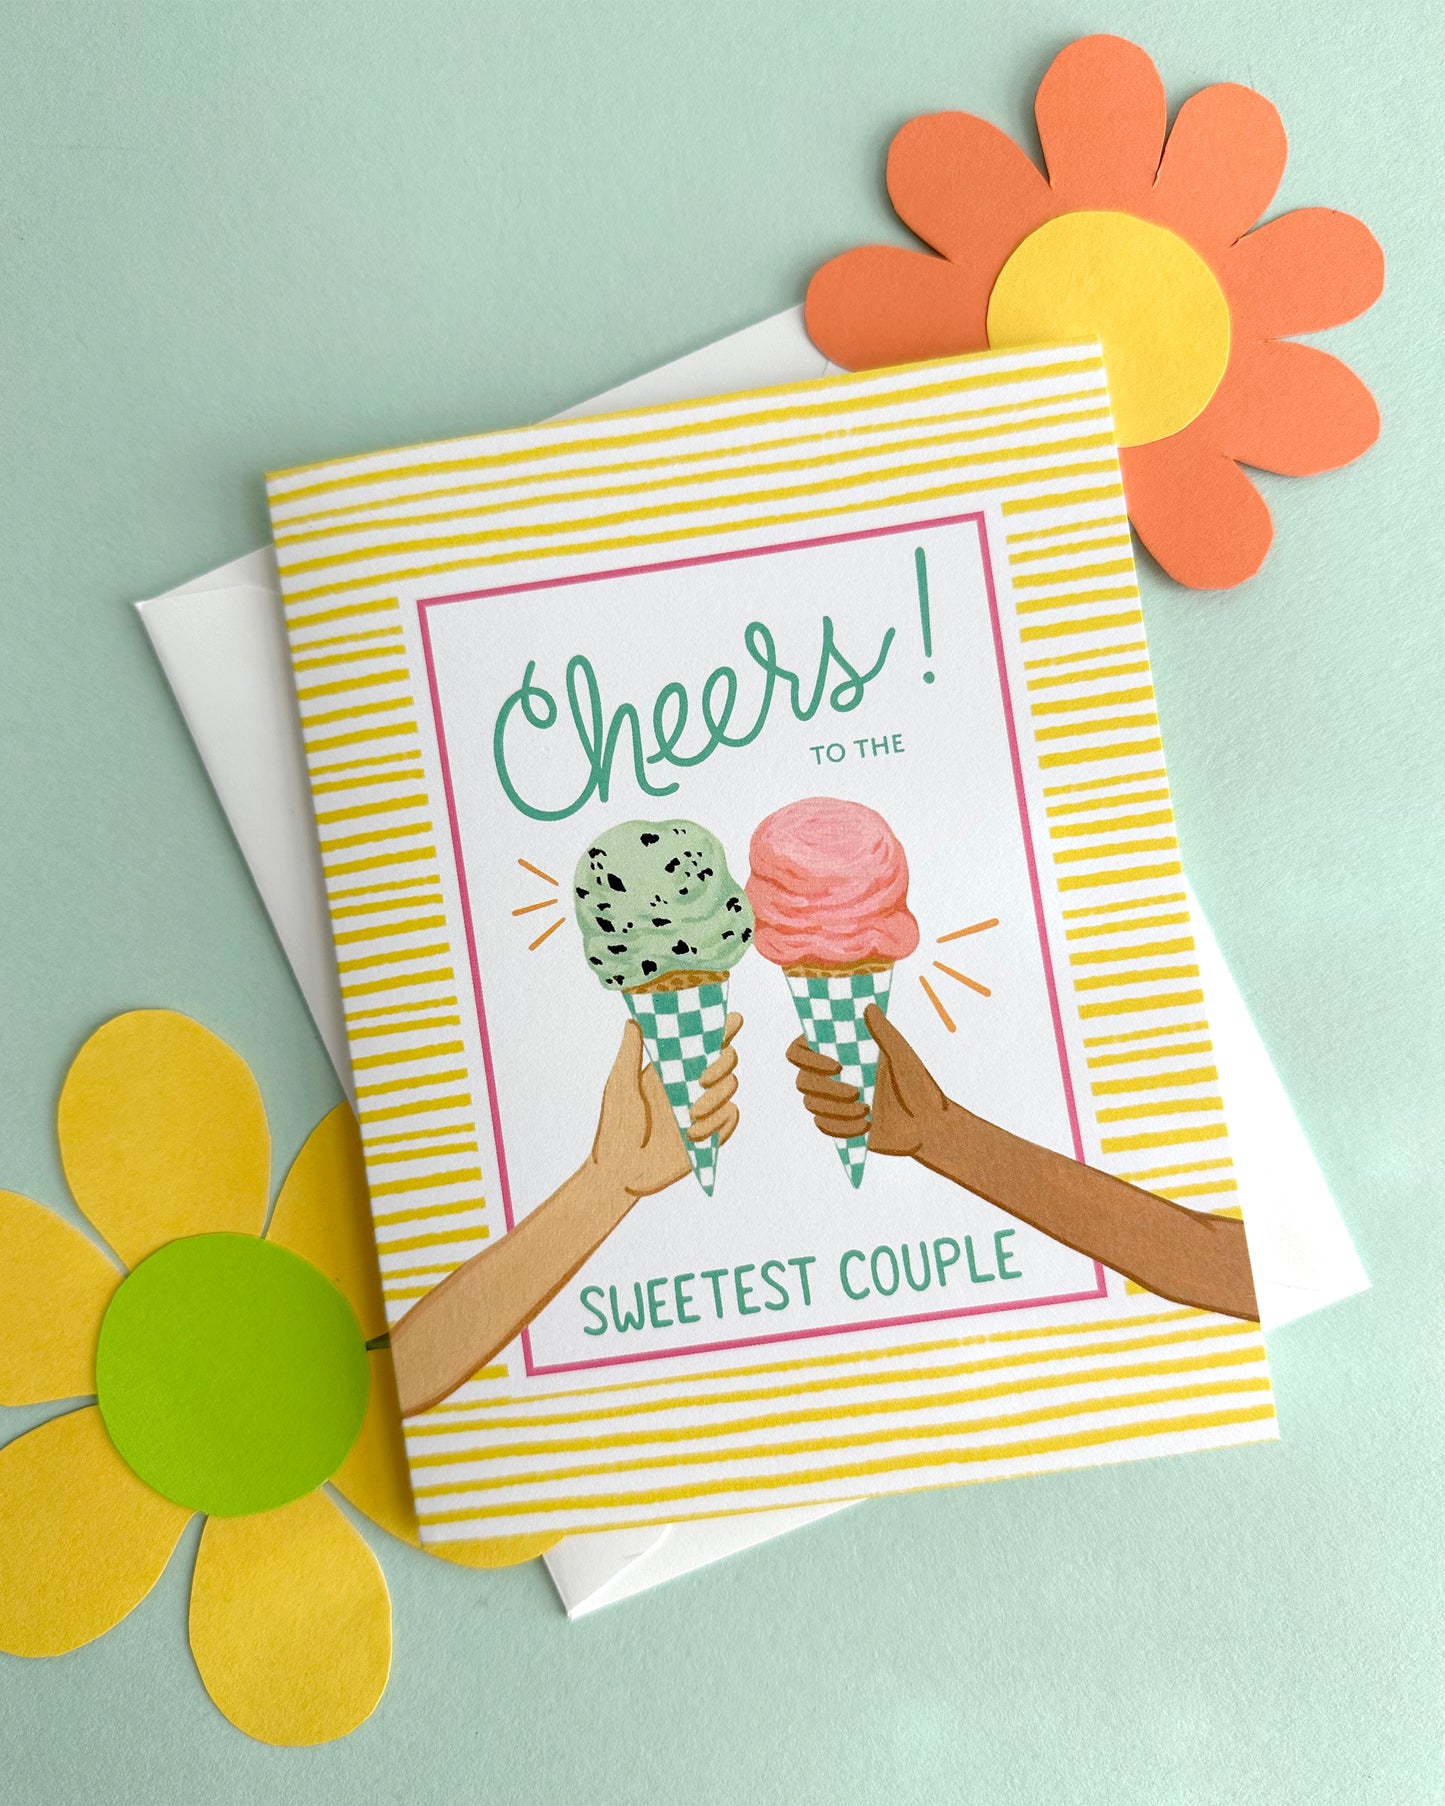 ICE CREAM CHEERS - WEDDING GREETING CARD